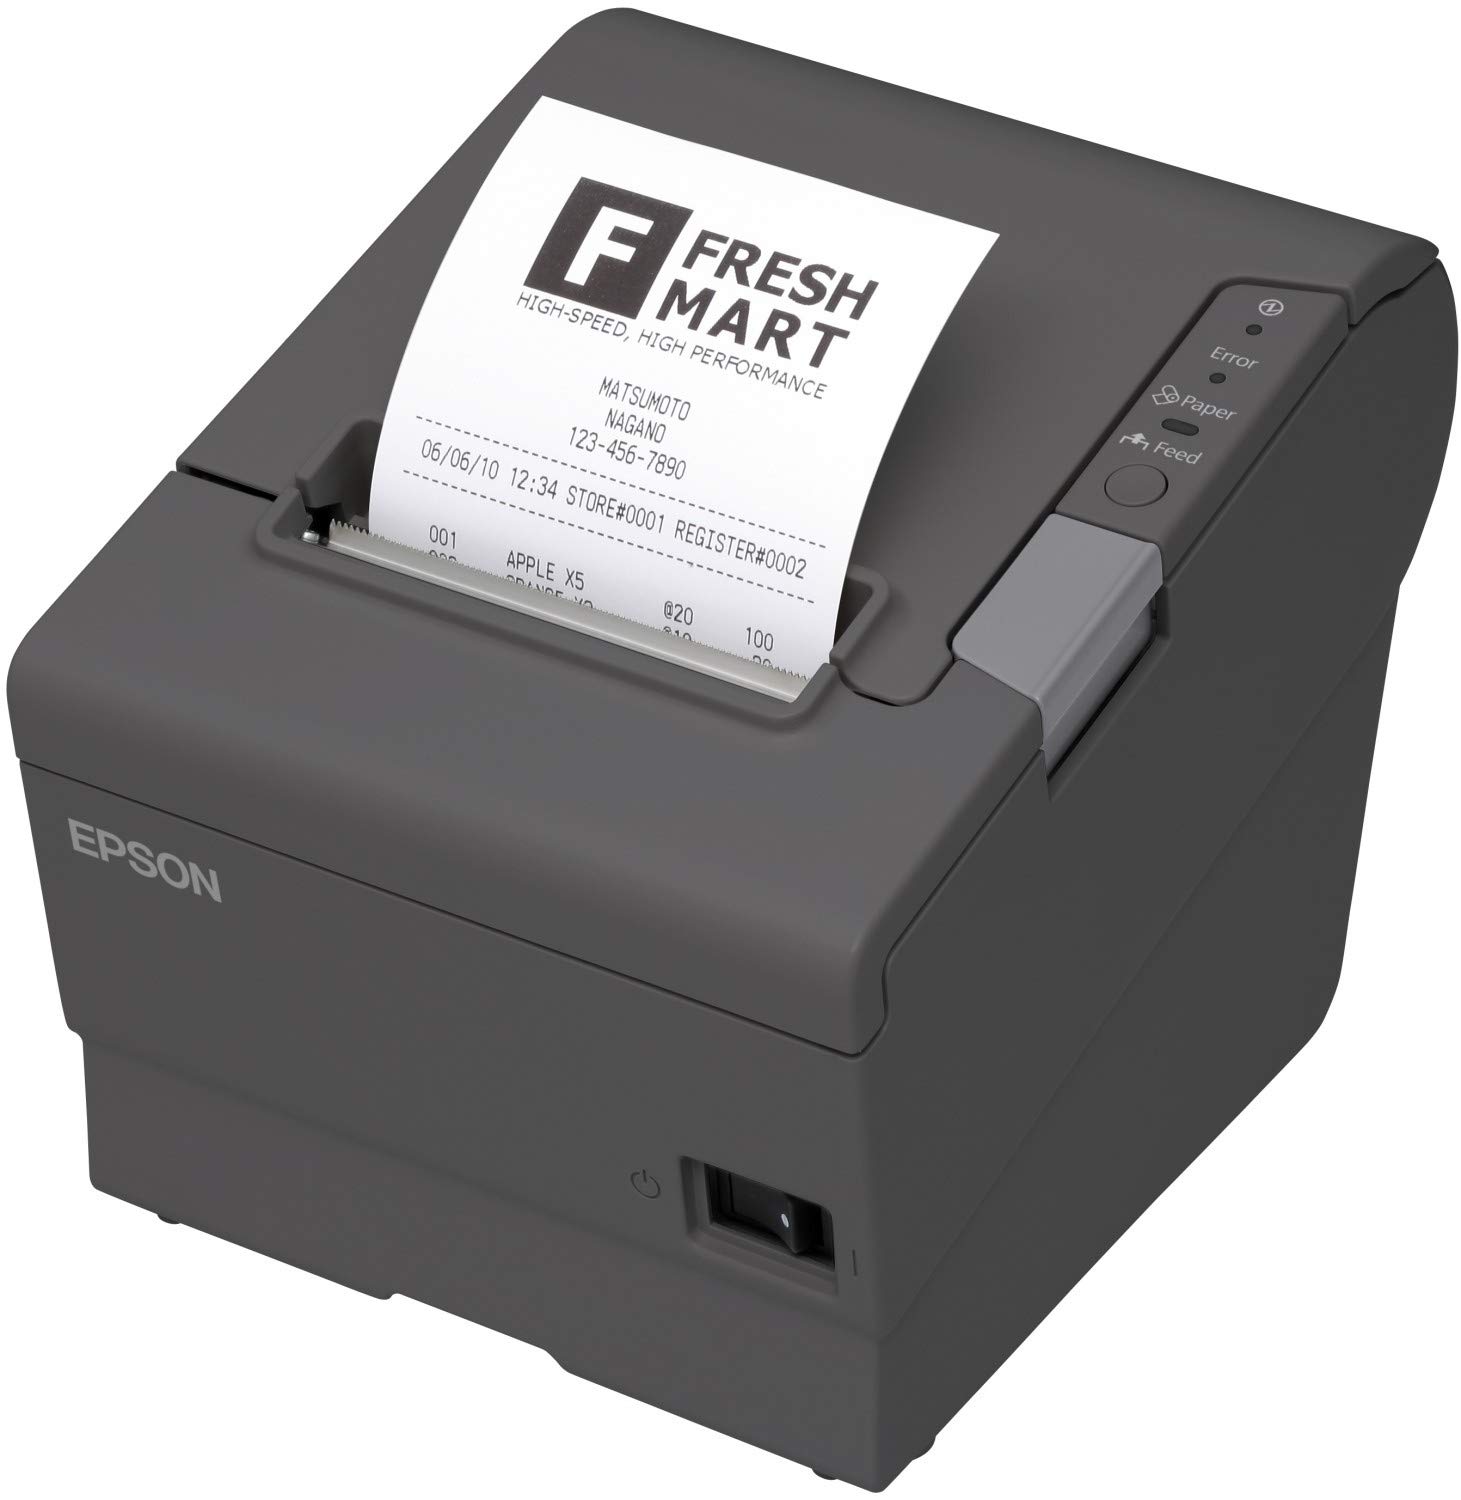 Epson TM-T88V Receipt Printer USB Serial, PS, EDG, EU